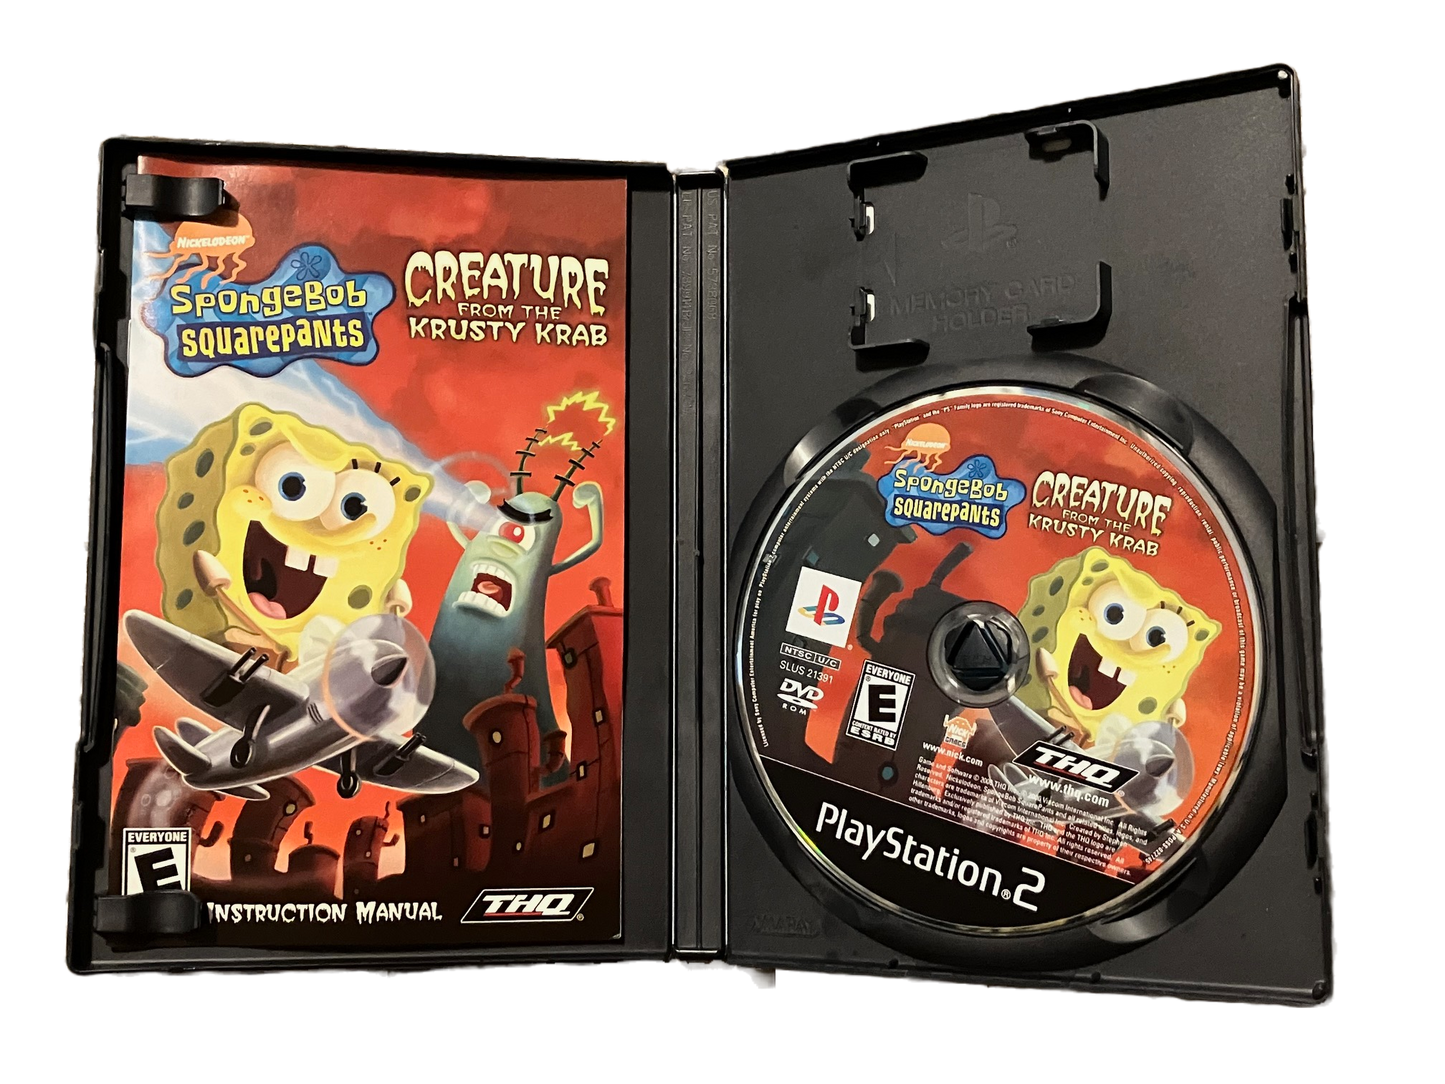 SpongeBob SquarePants: Creature from Krusty Krab Sony Playstation 2 PS2 Complete